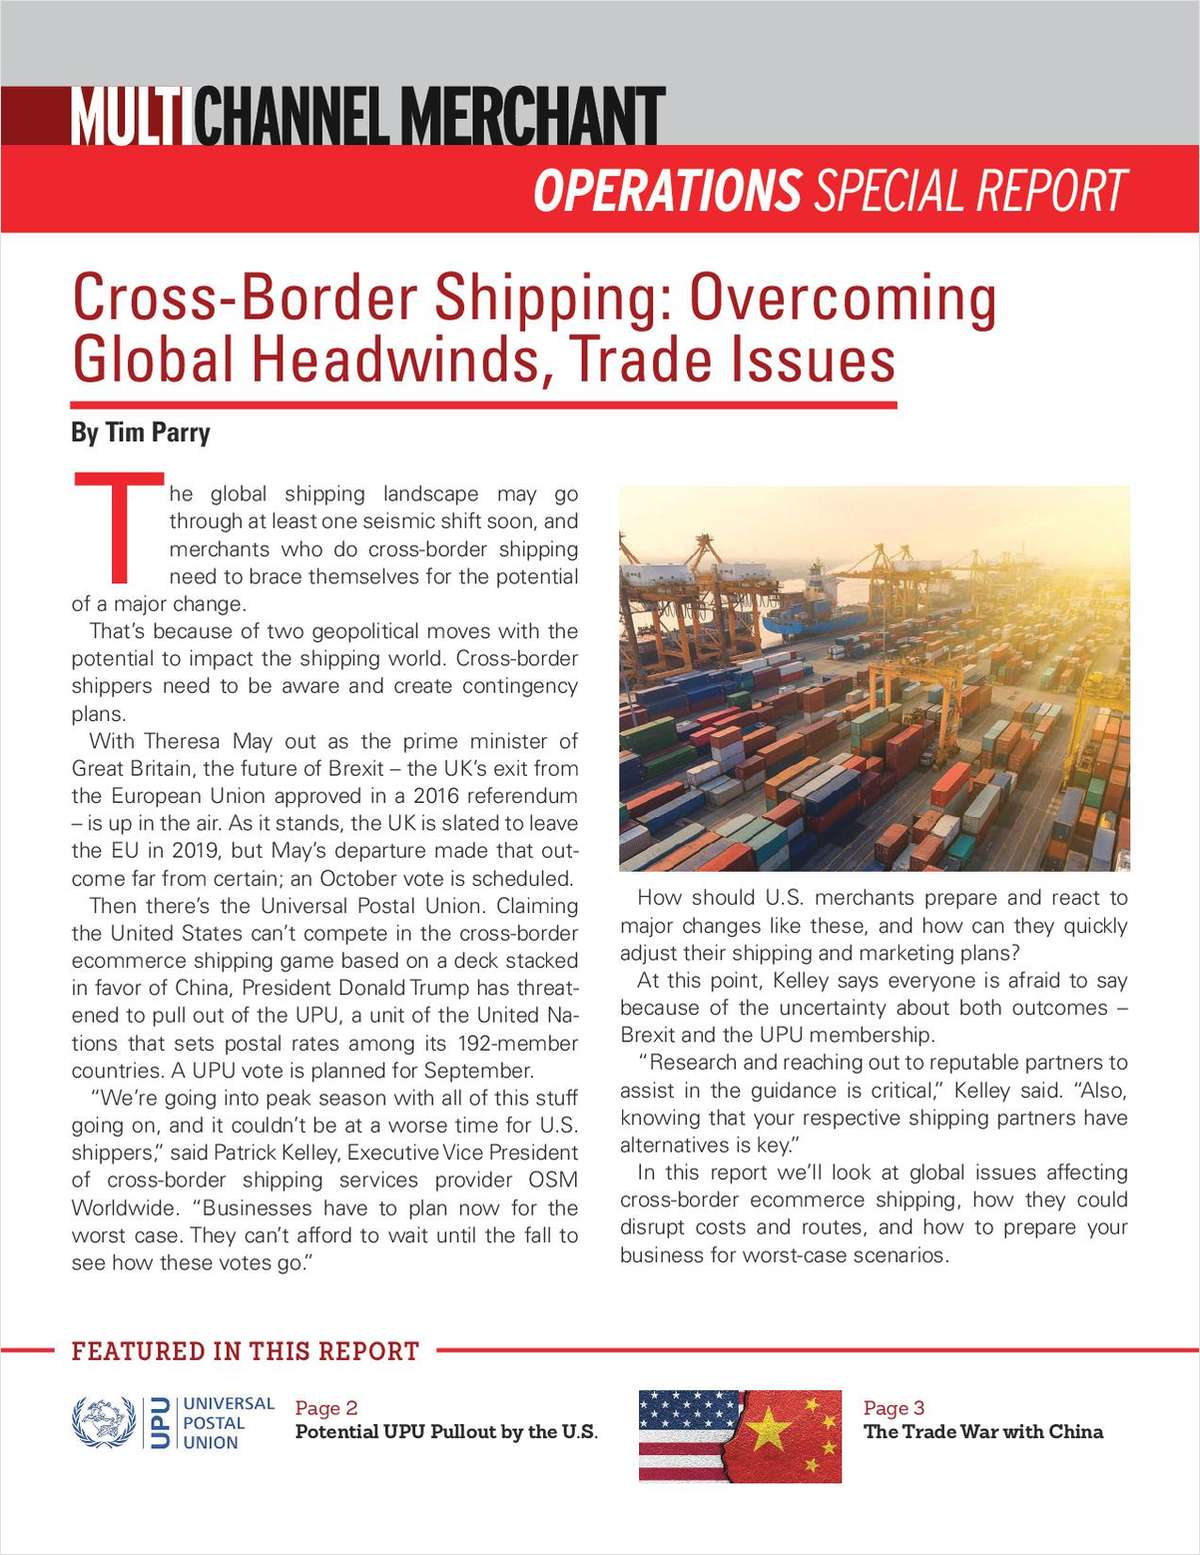 Cross-Border Shipping: Overcoming Global Headwinds, Trade Issues